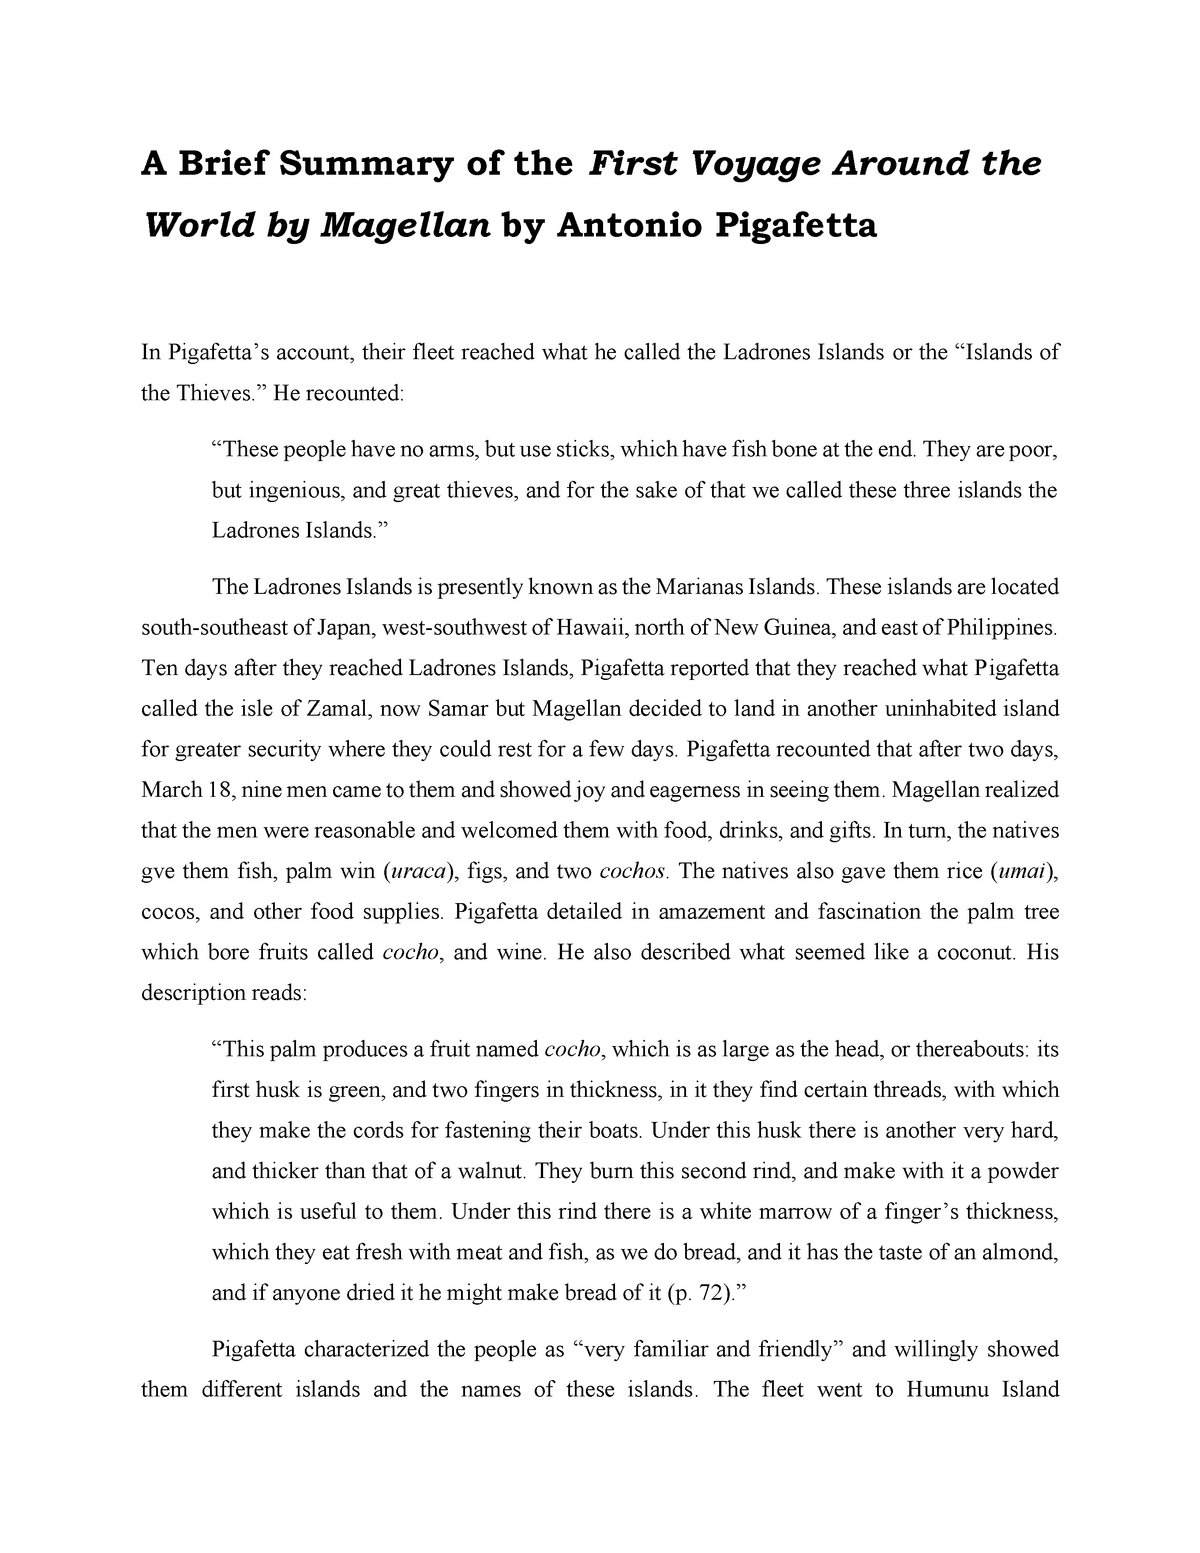 the first voyage by antonio pigafetta summary